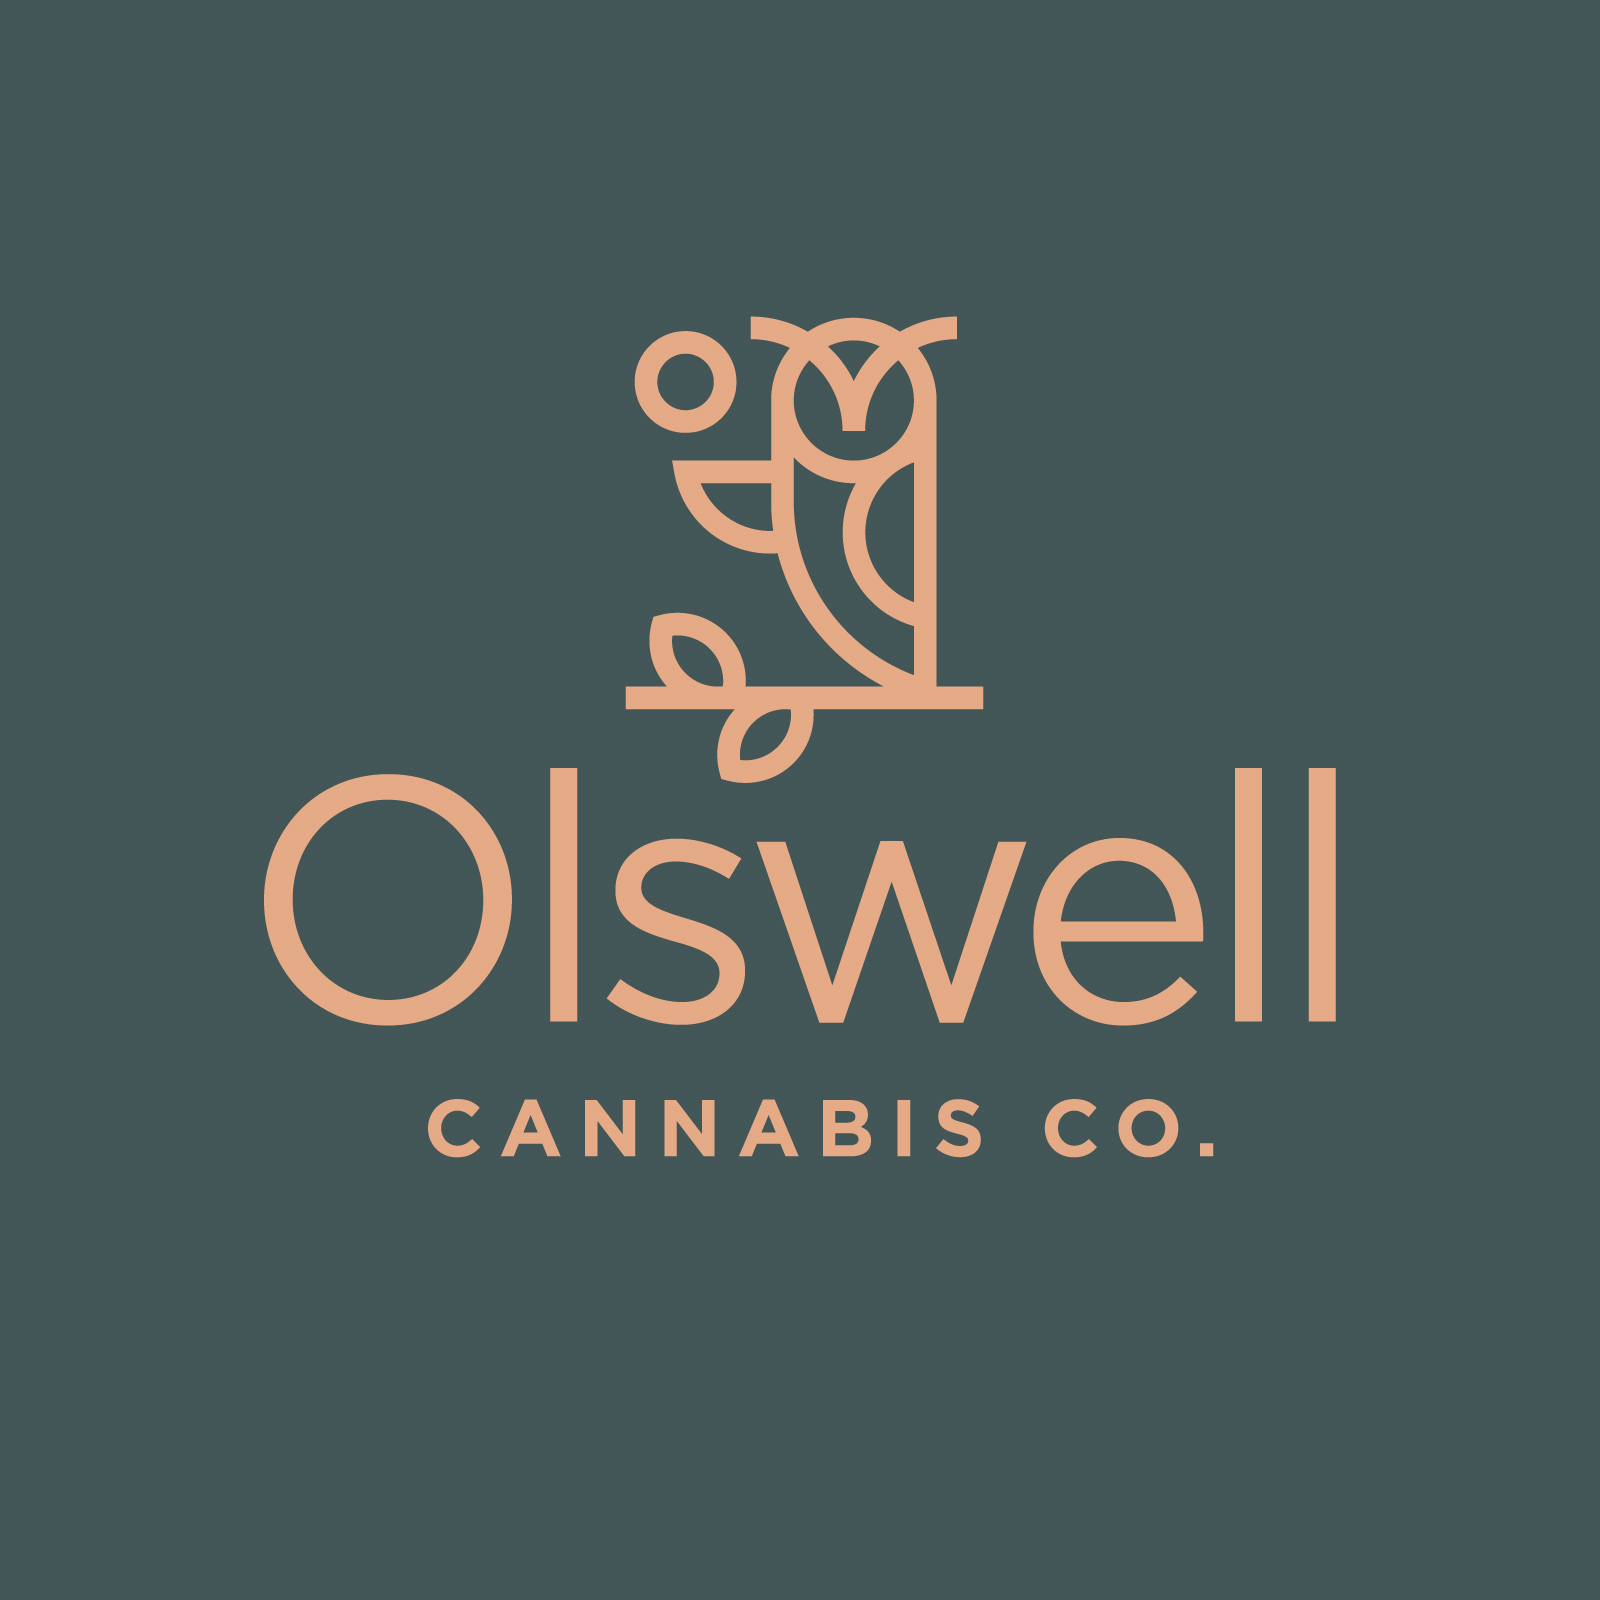 Olswell Cannabis Co. logo